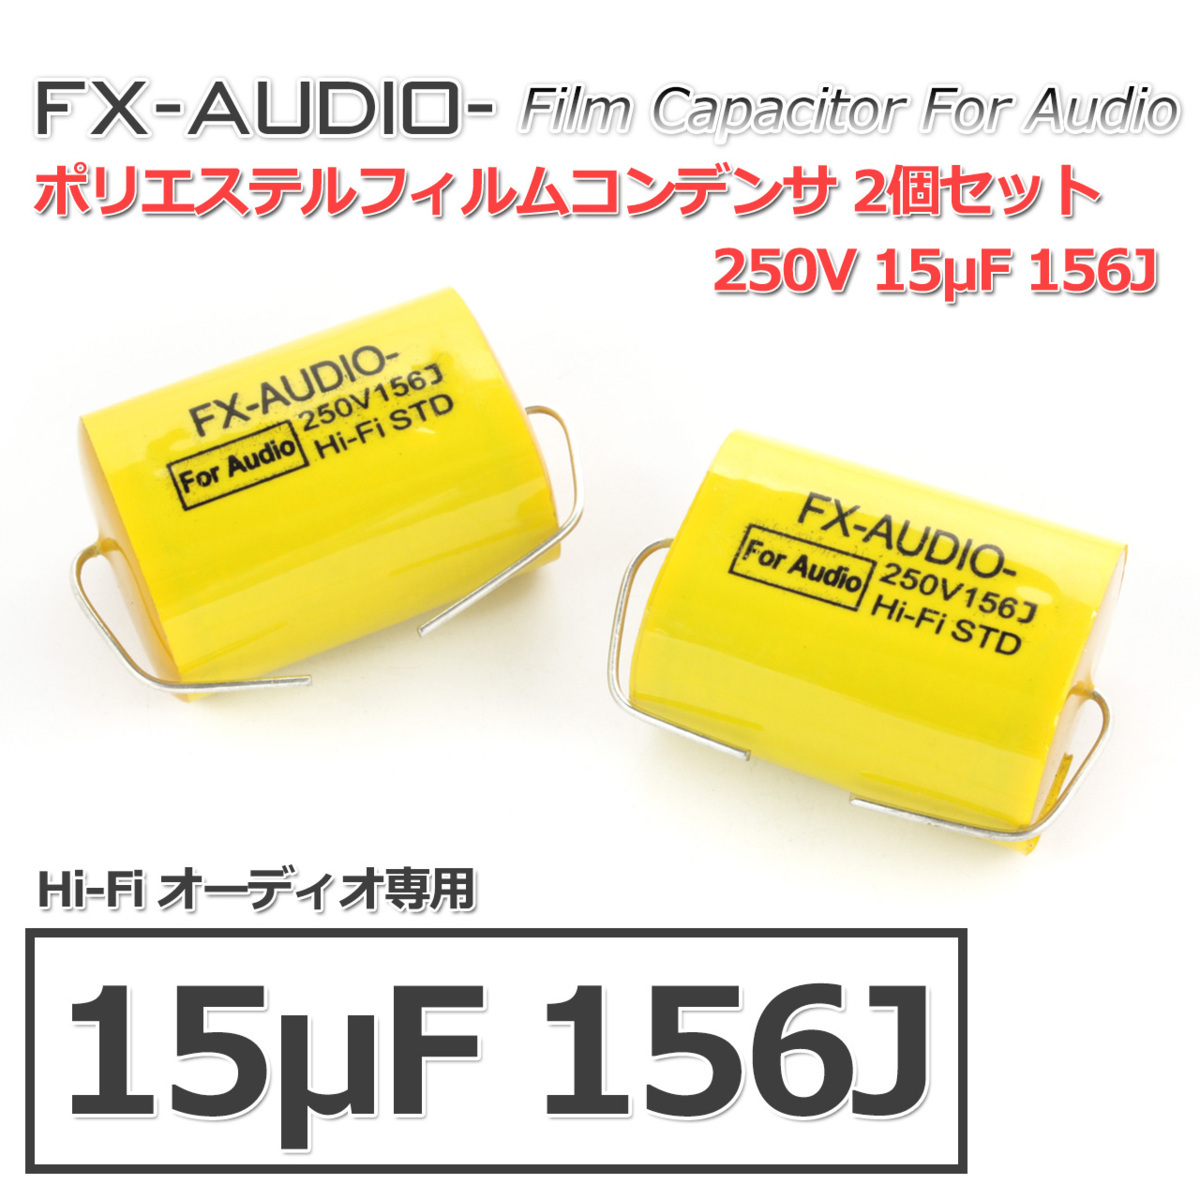 FX-AUDIO- 限定生産製品専用オーディオ用ポリエステルフィルムコンデンサ 250V 15μF 156J 2個セット ツイーター用・ネットワーク用にも_画像1